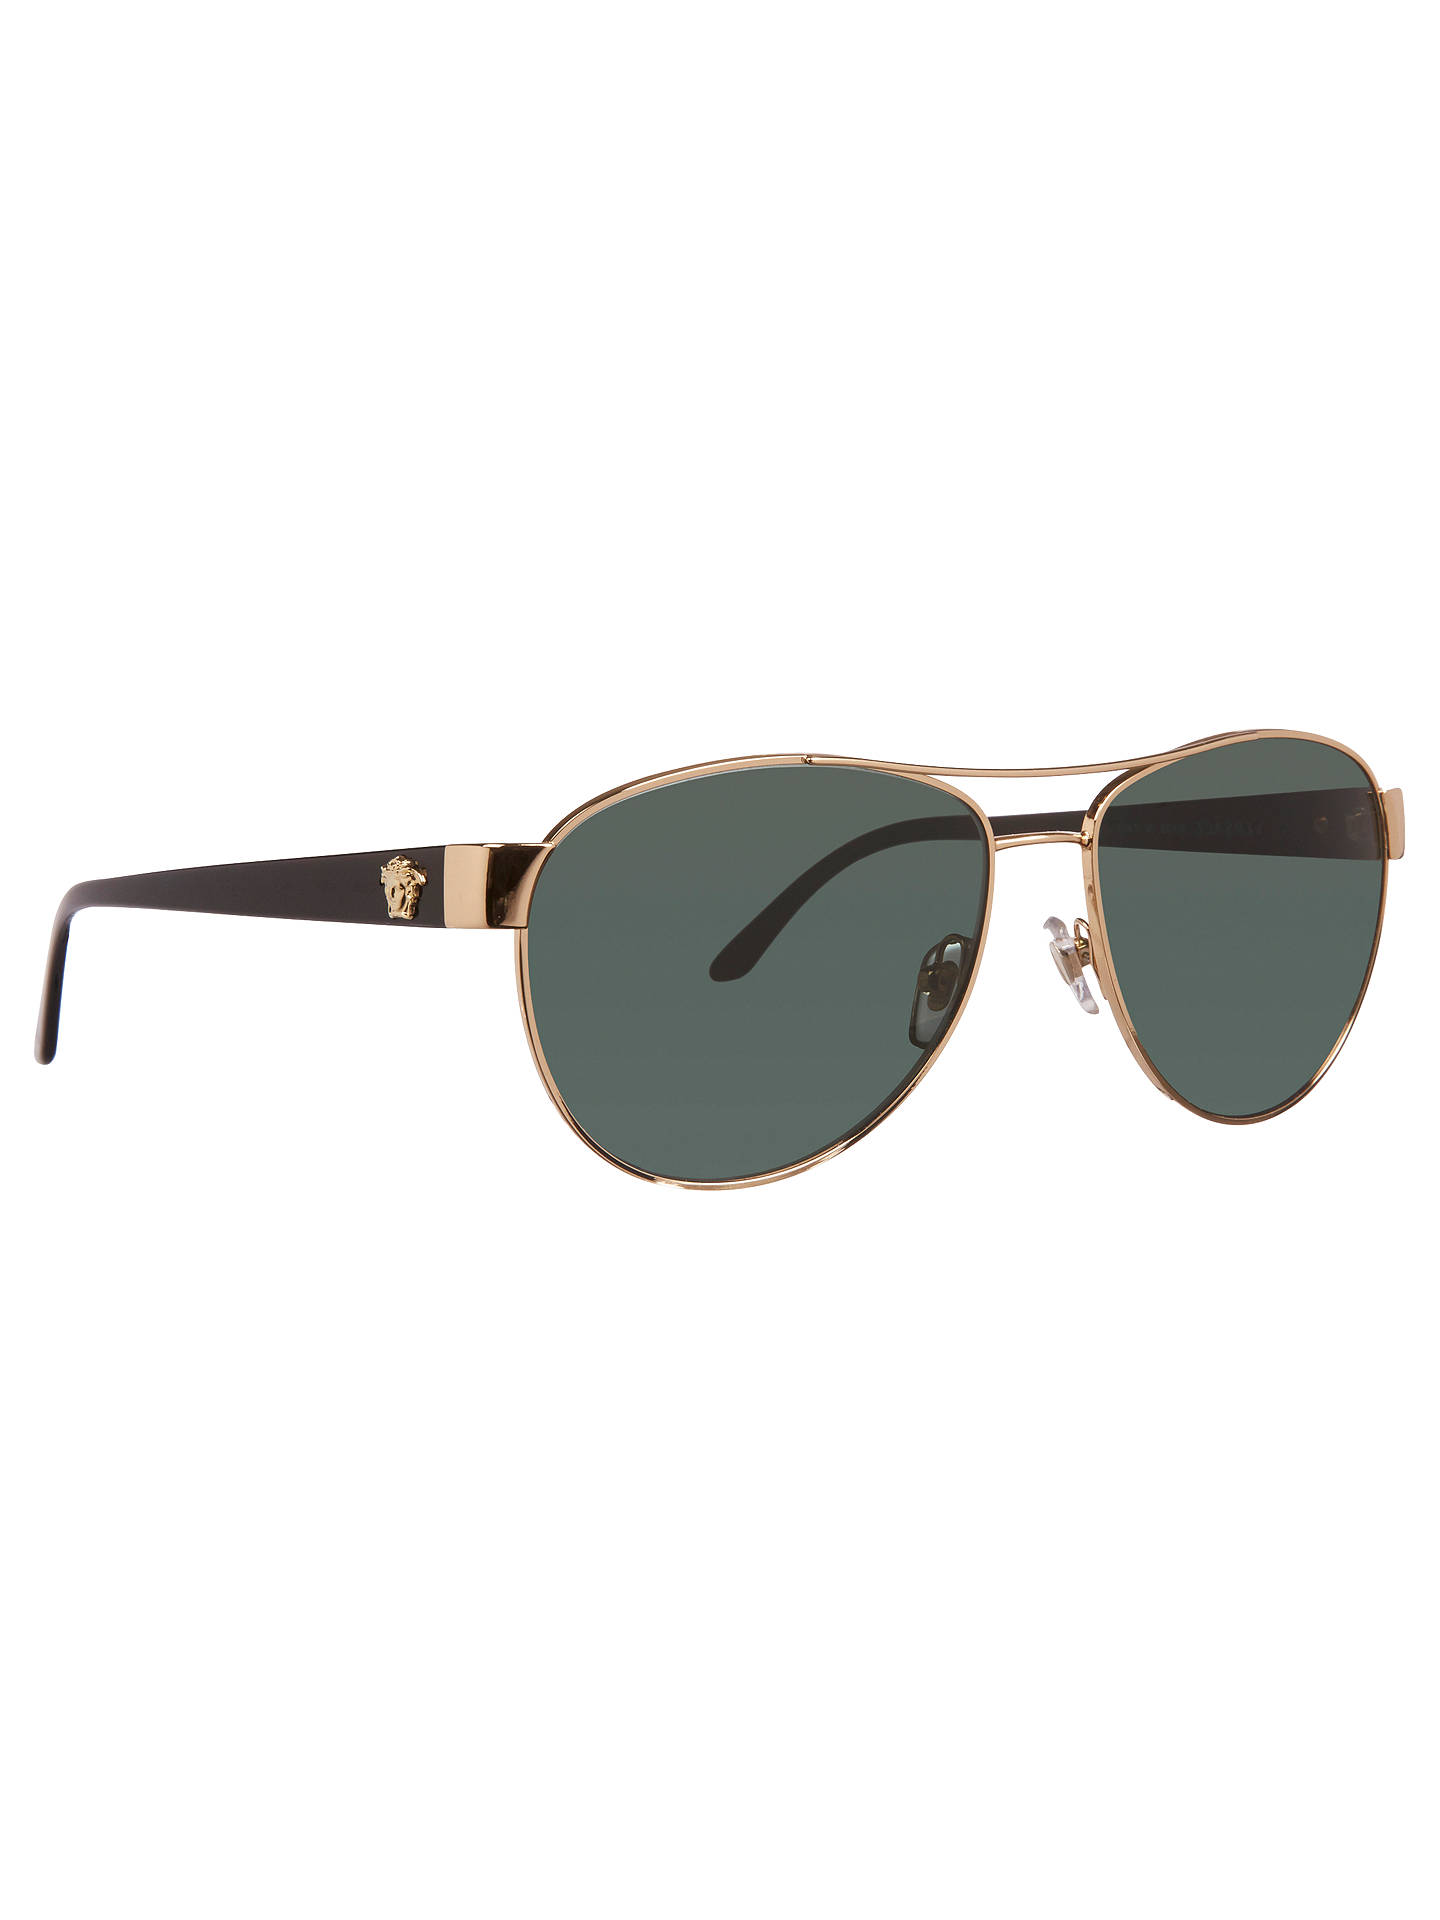 Versace VE2145 Pilot Sunglasses, Gold/Grey at John Lewis & Partners